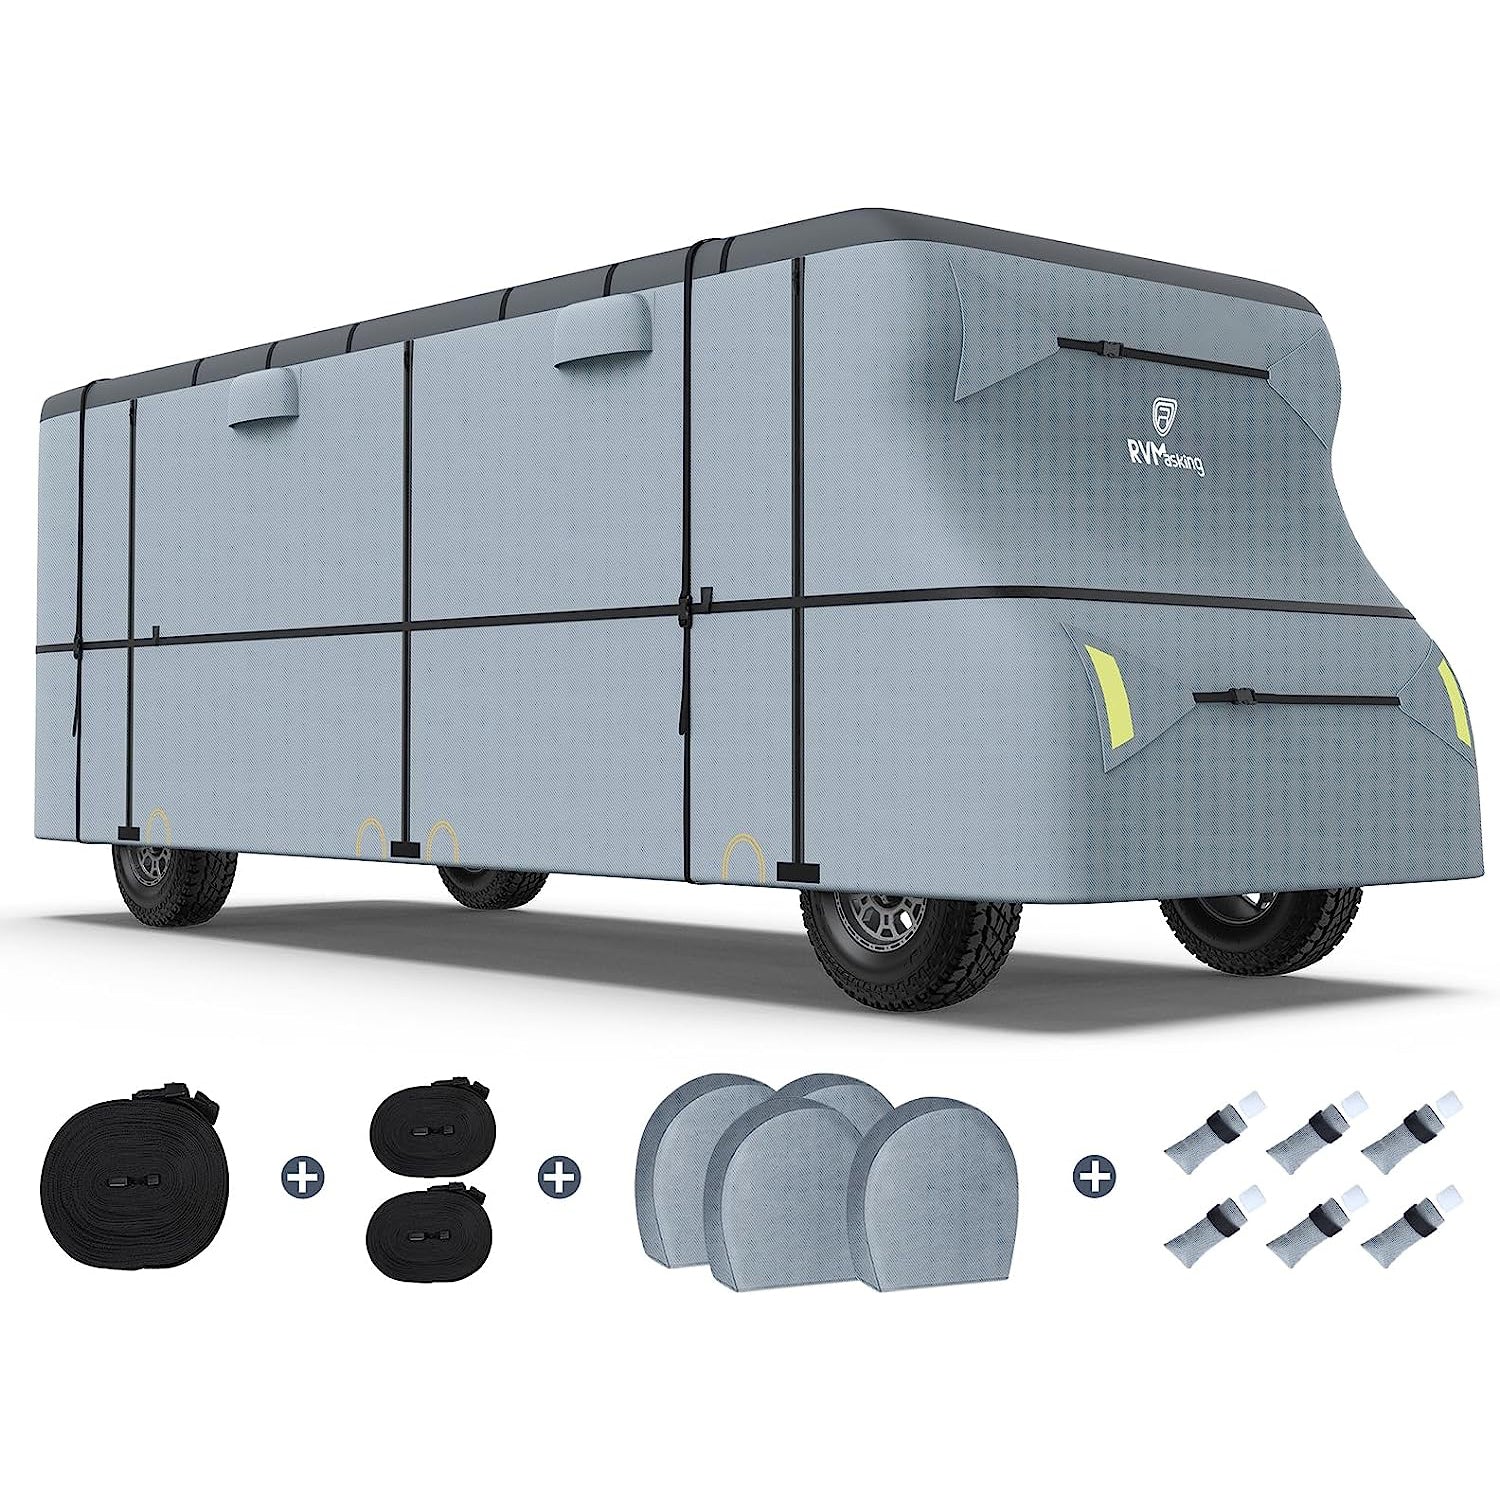 Car RV Caravan Roof Cover 210D Waterproof Dust-proof Sunshade Anti